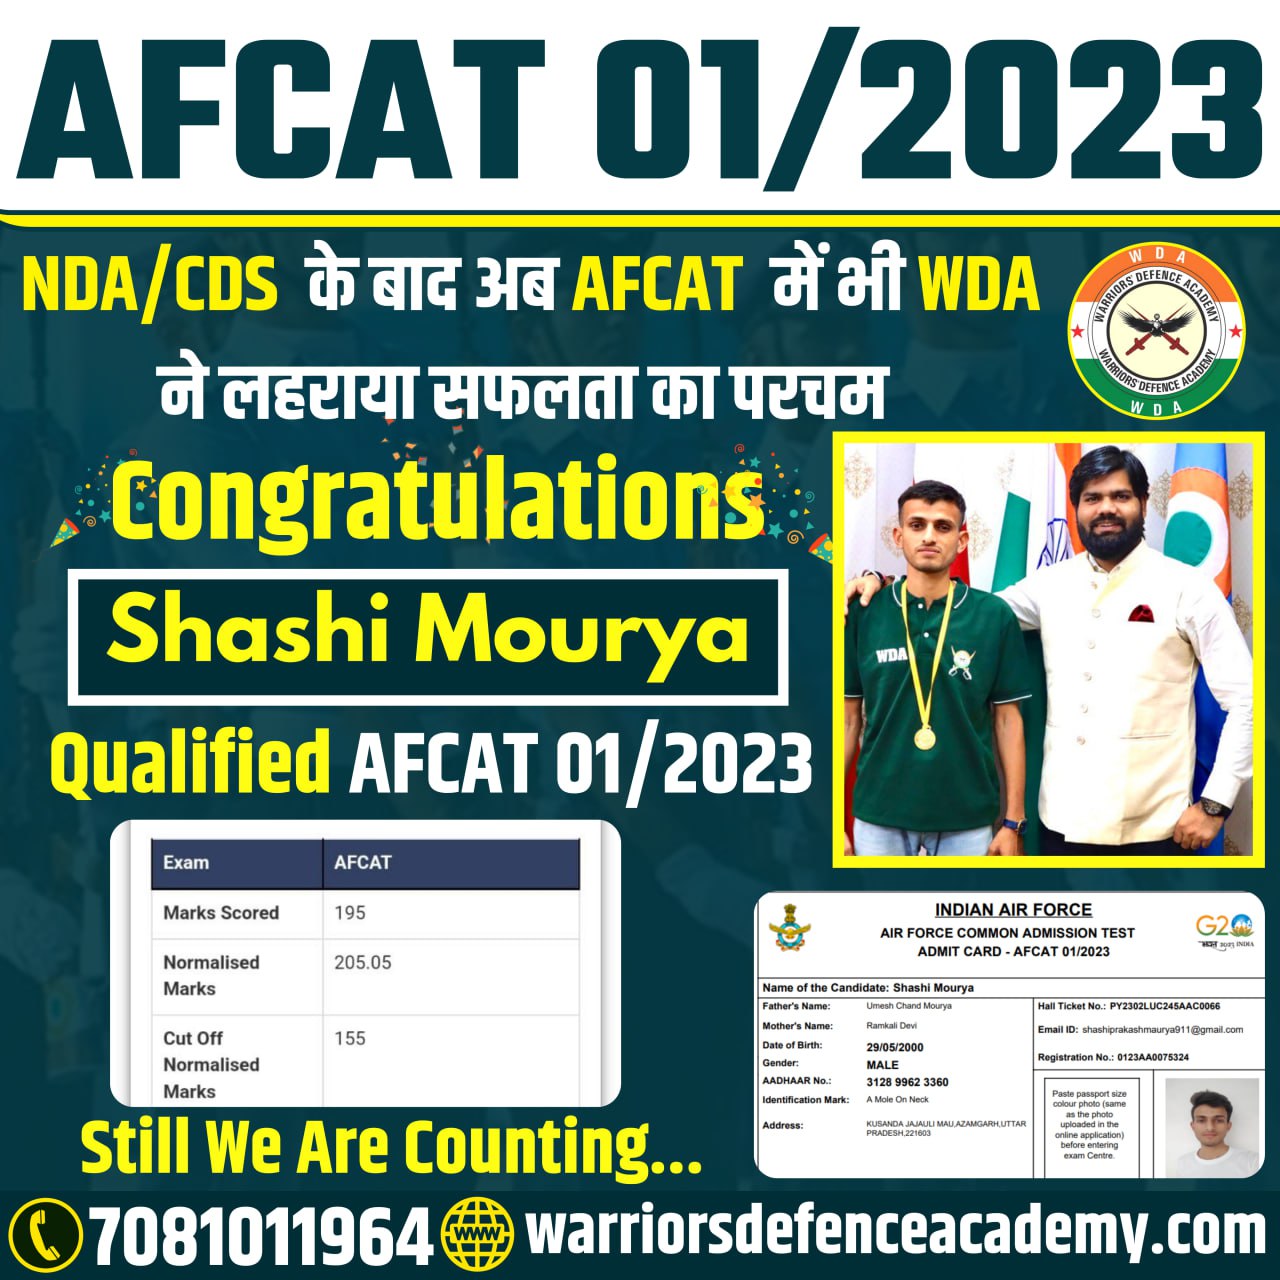 No-1 NDA Coaching in Lucknow, UP India | Warriors Defence Academy Best NDA Coaching in Lucknow